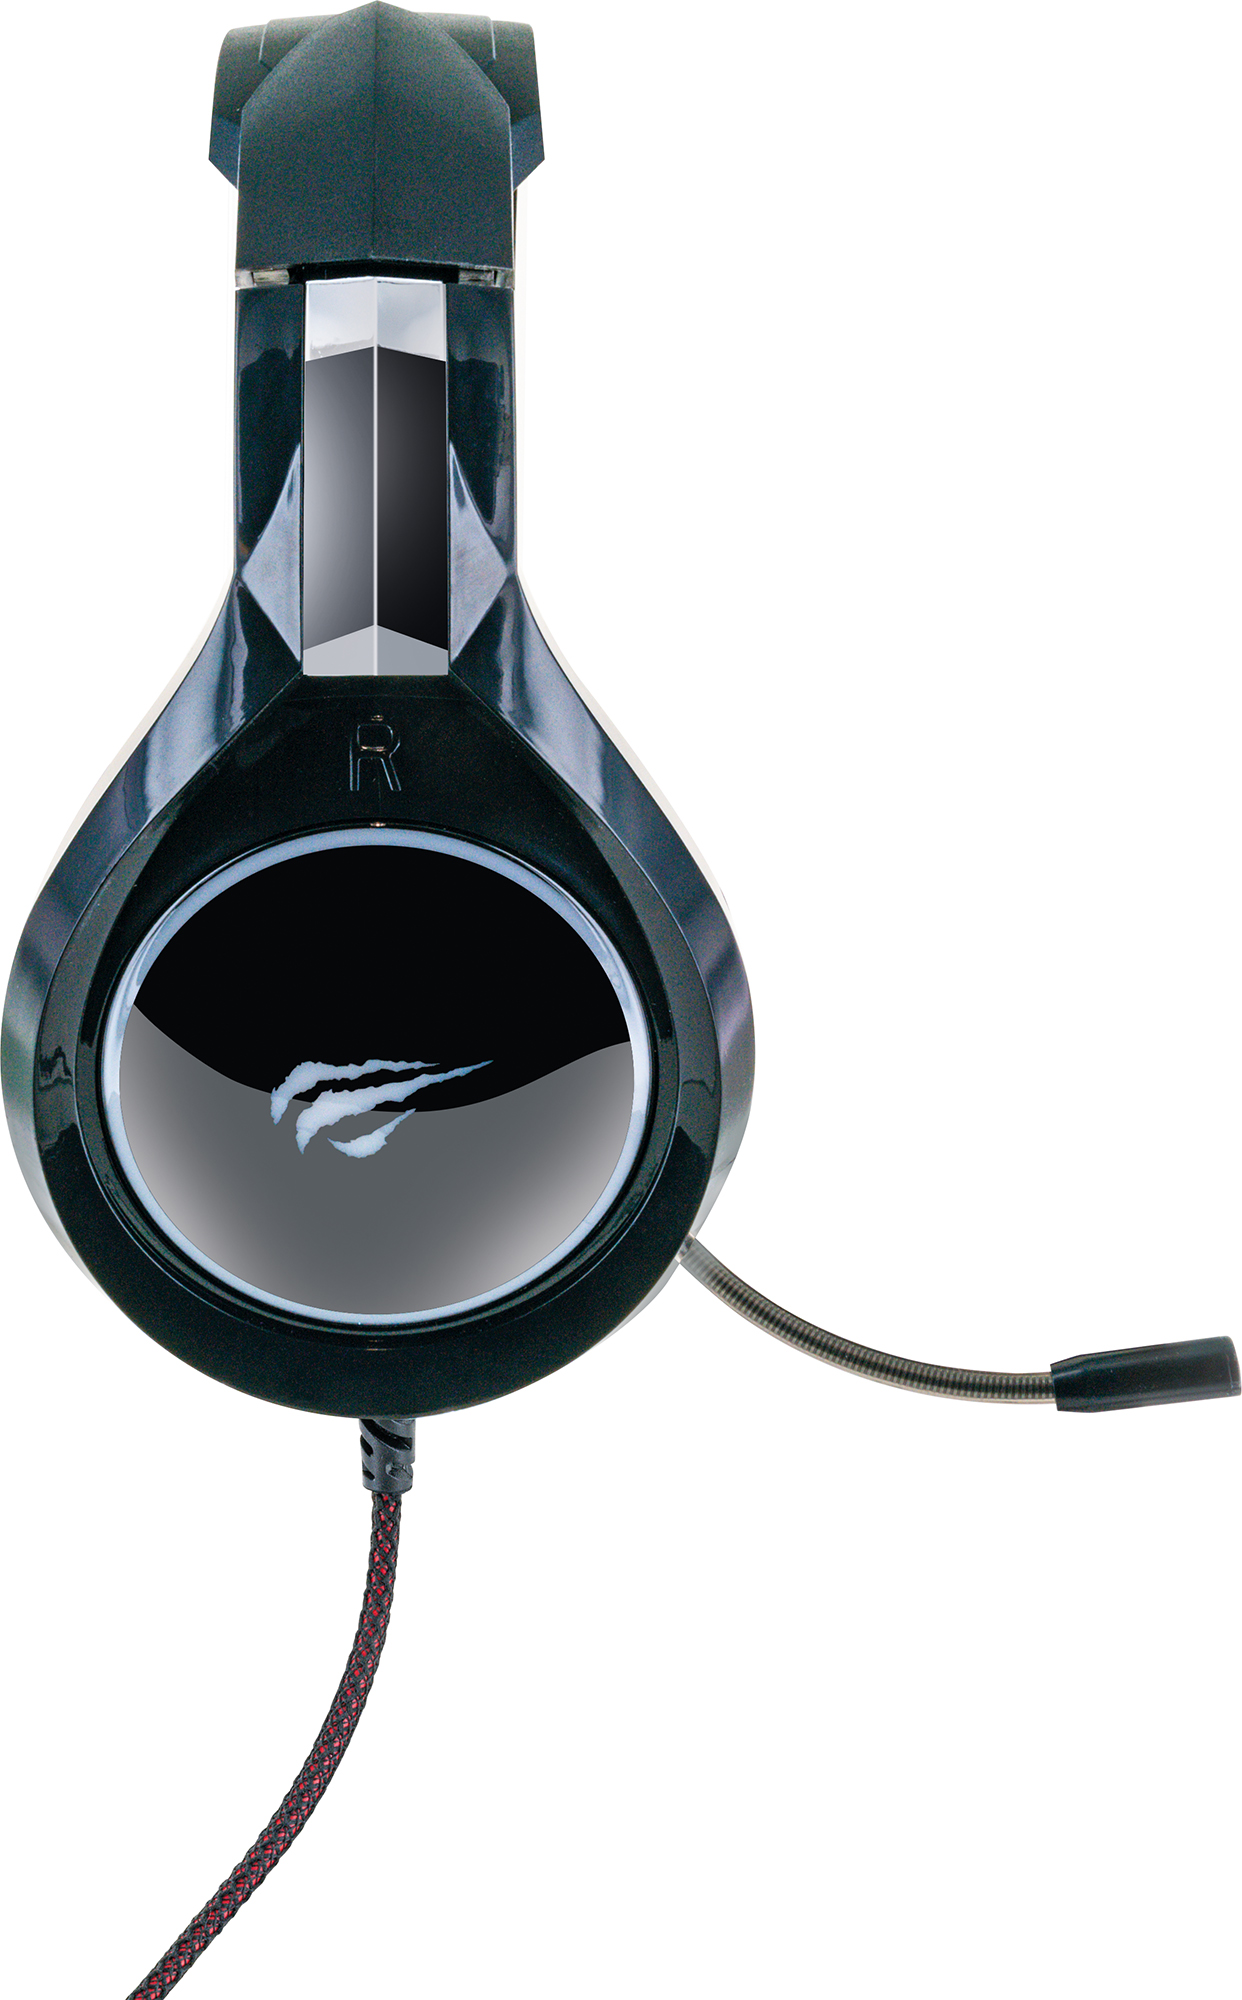 SCHWAIGER -GH50-, Over-ear Schwarz Gaming Headset